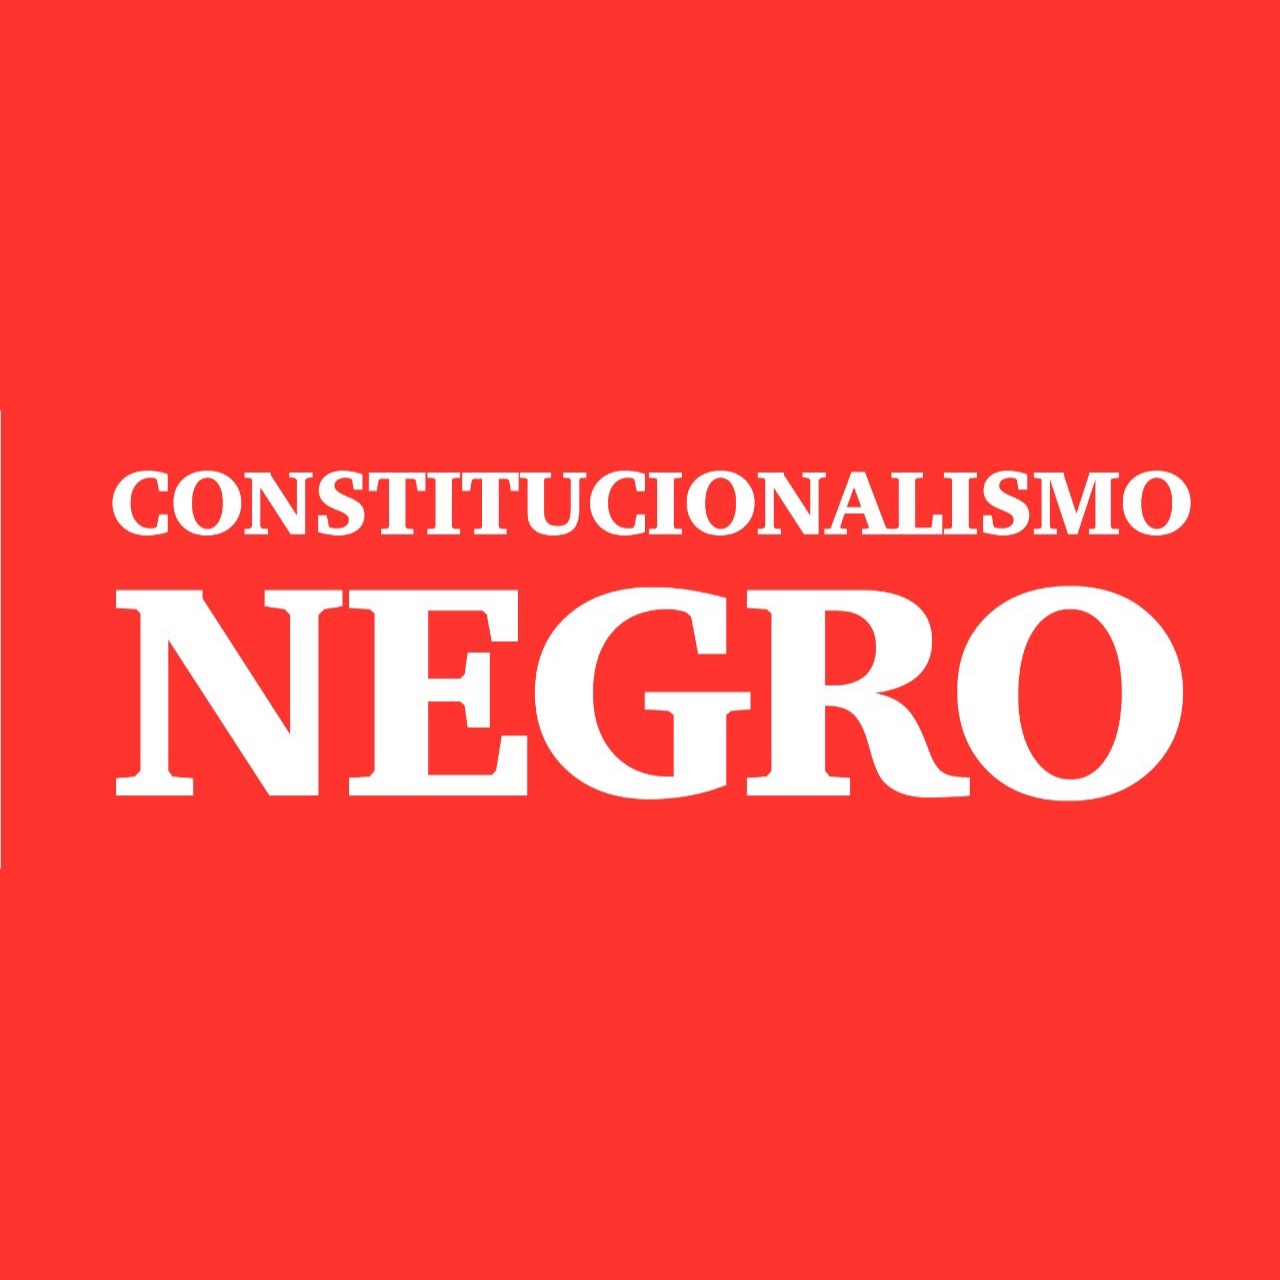 Aula aberta aborda Constitucionalismo Negro na próxima segunda-feira